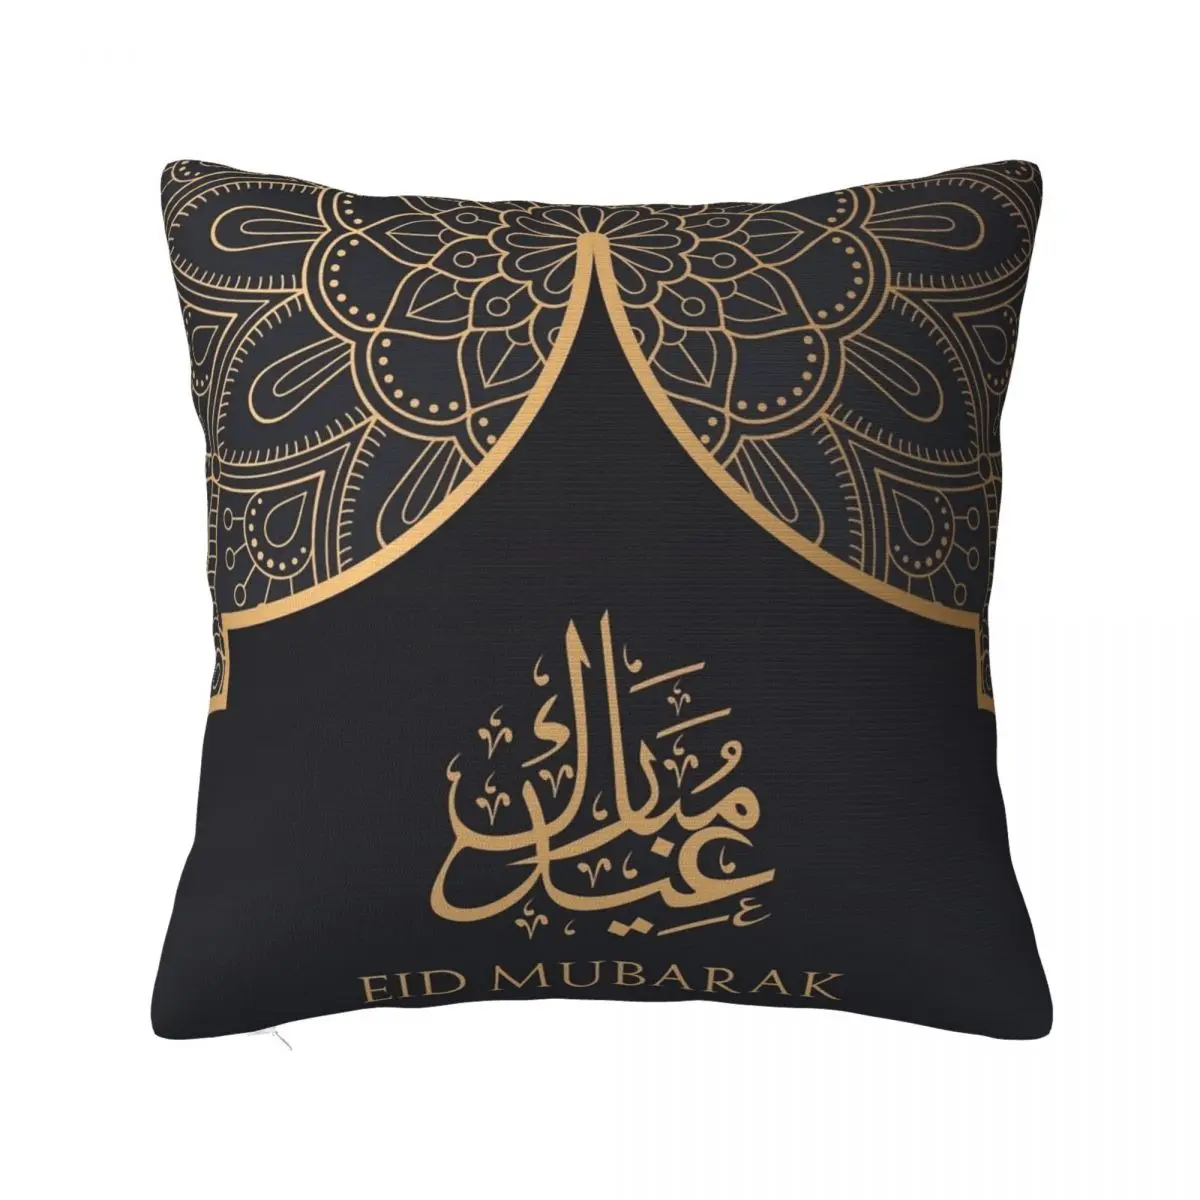 

ИД Мубарак Рамадан кареем наволочка с двусторонним принтом наволочка для подушки подарок наволочка для диванной подушки домашняя квадратная 45x45 см